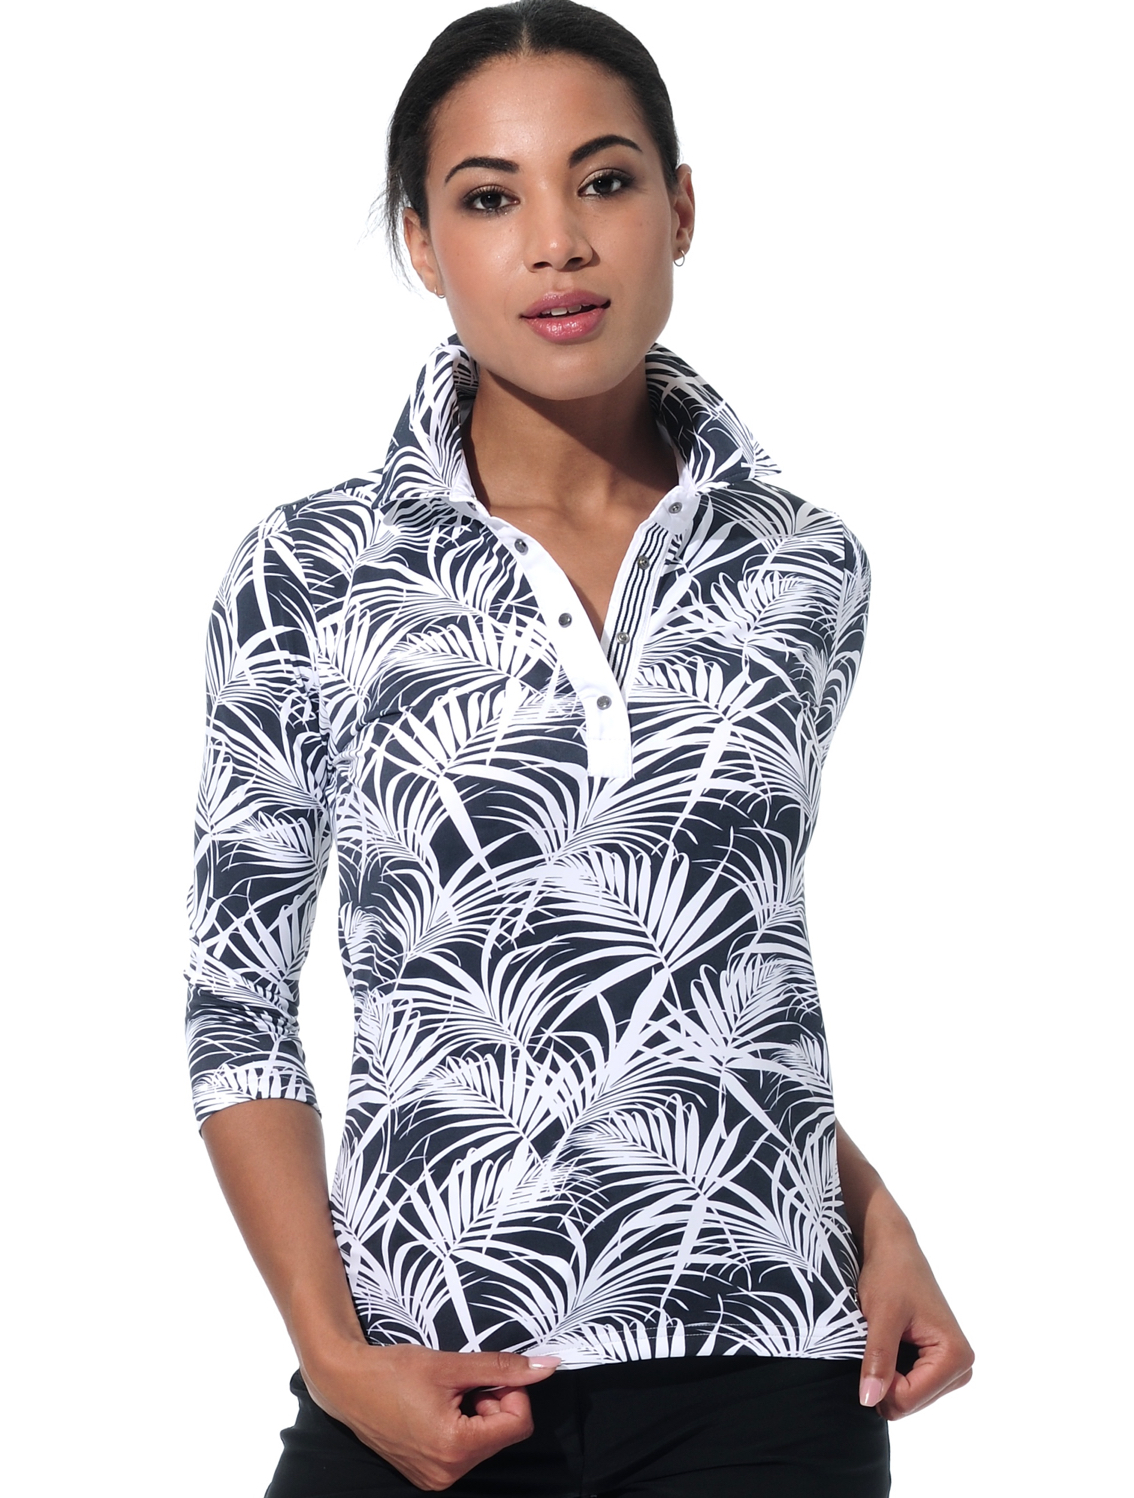 Jungle print polo shirt black/white 